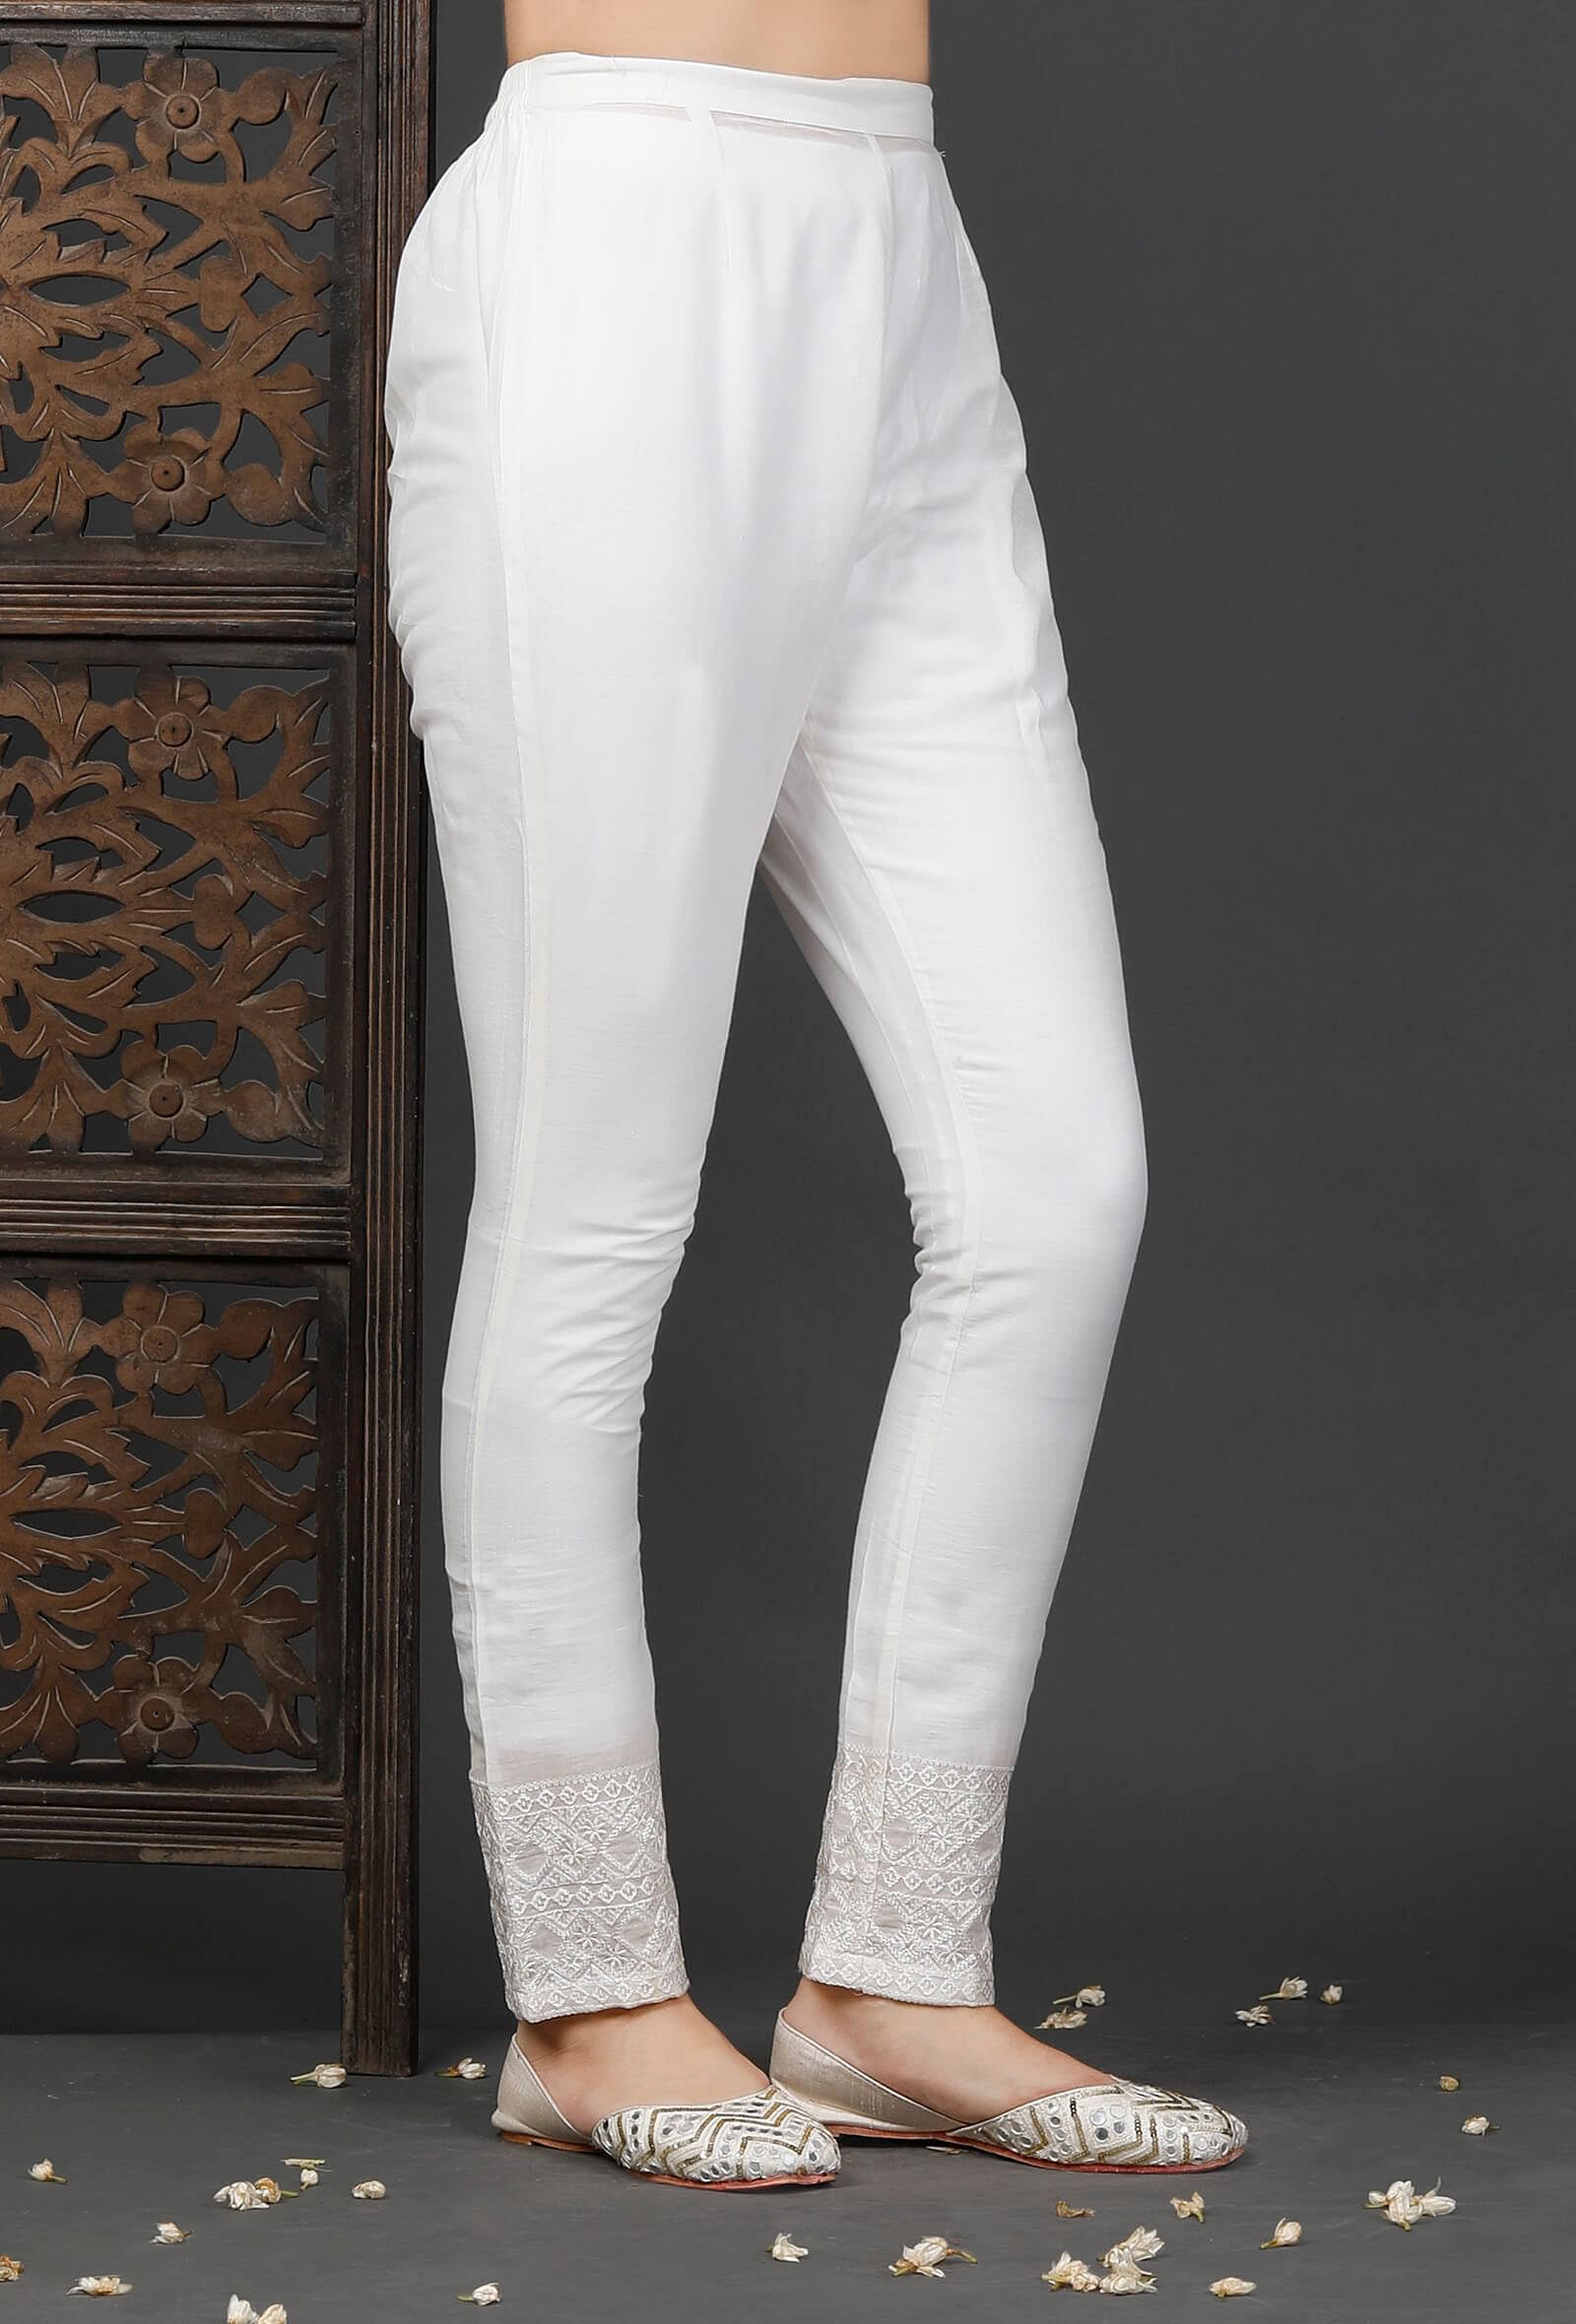 White Cotton Pants For Ladies